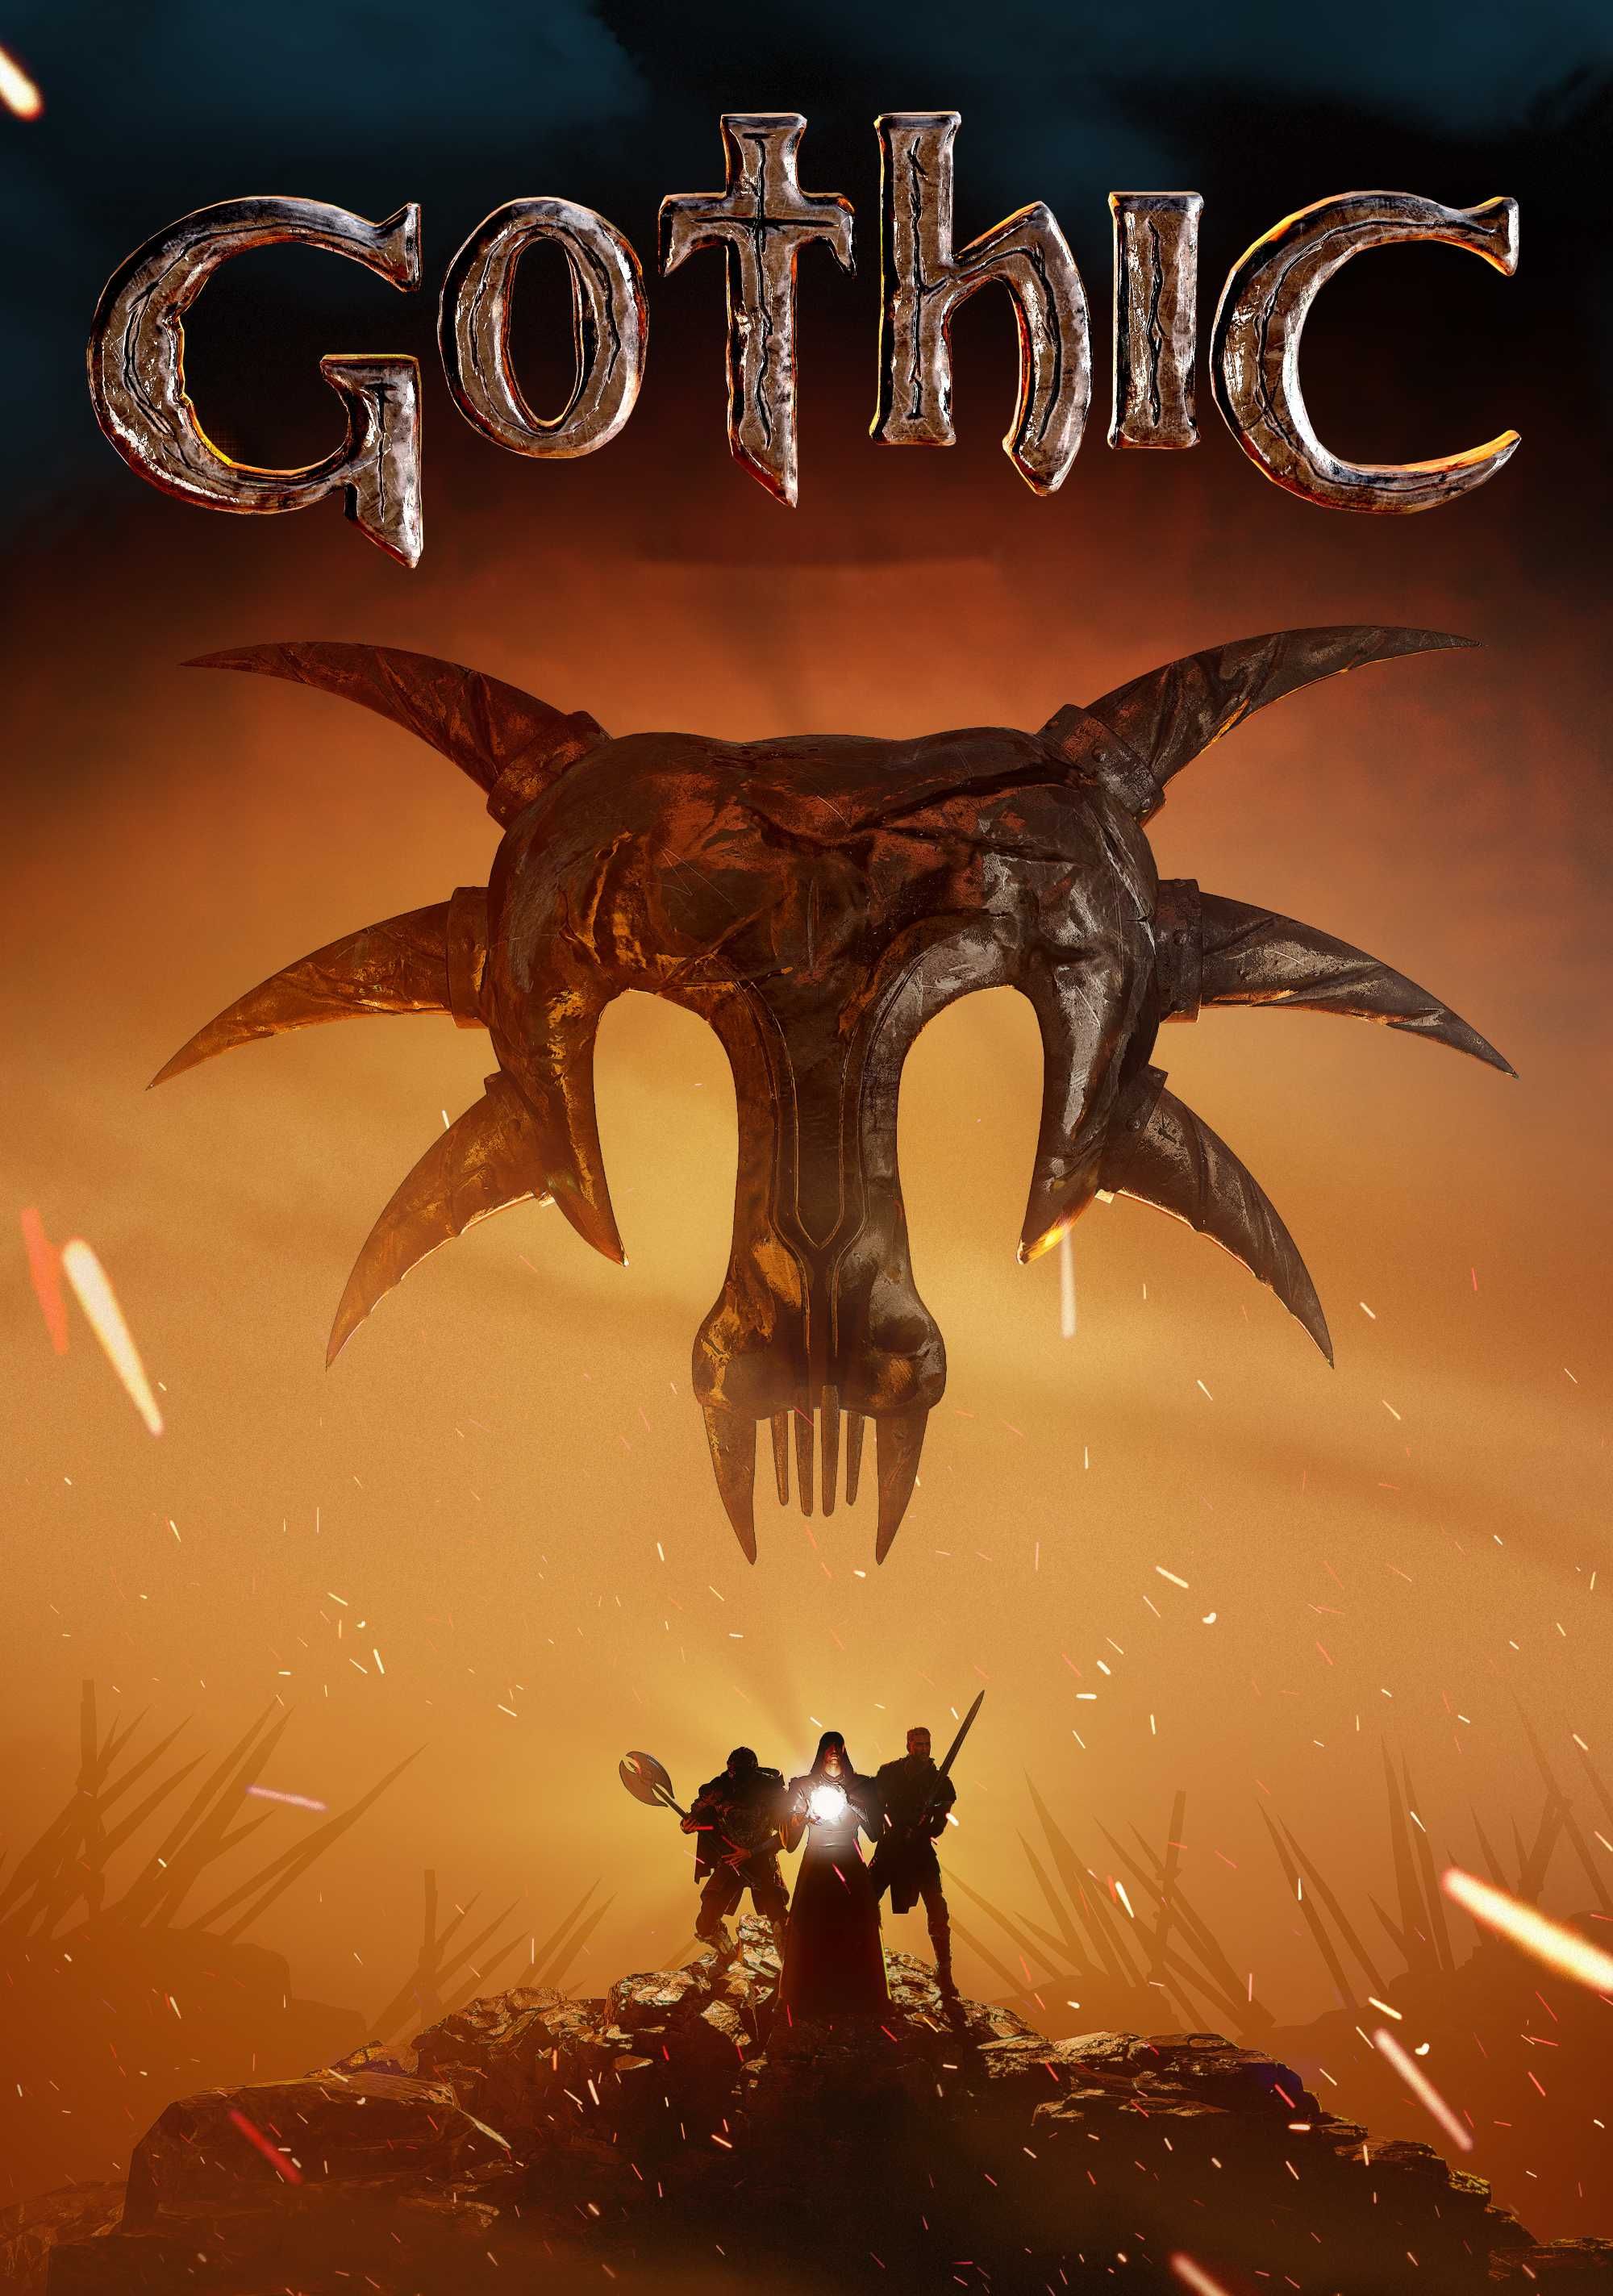 Видео игра Gothic на двух  СД-дисках.